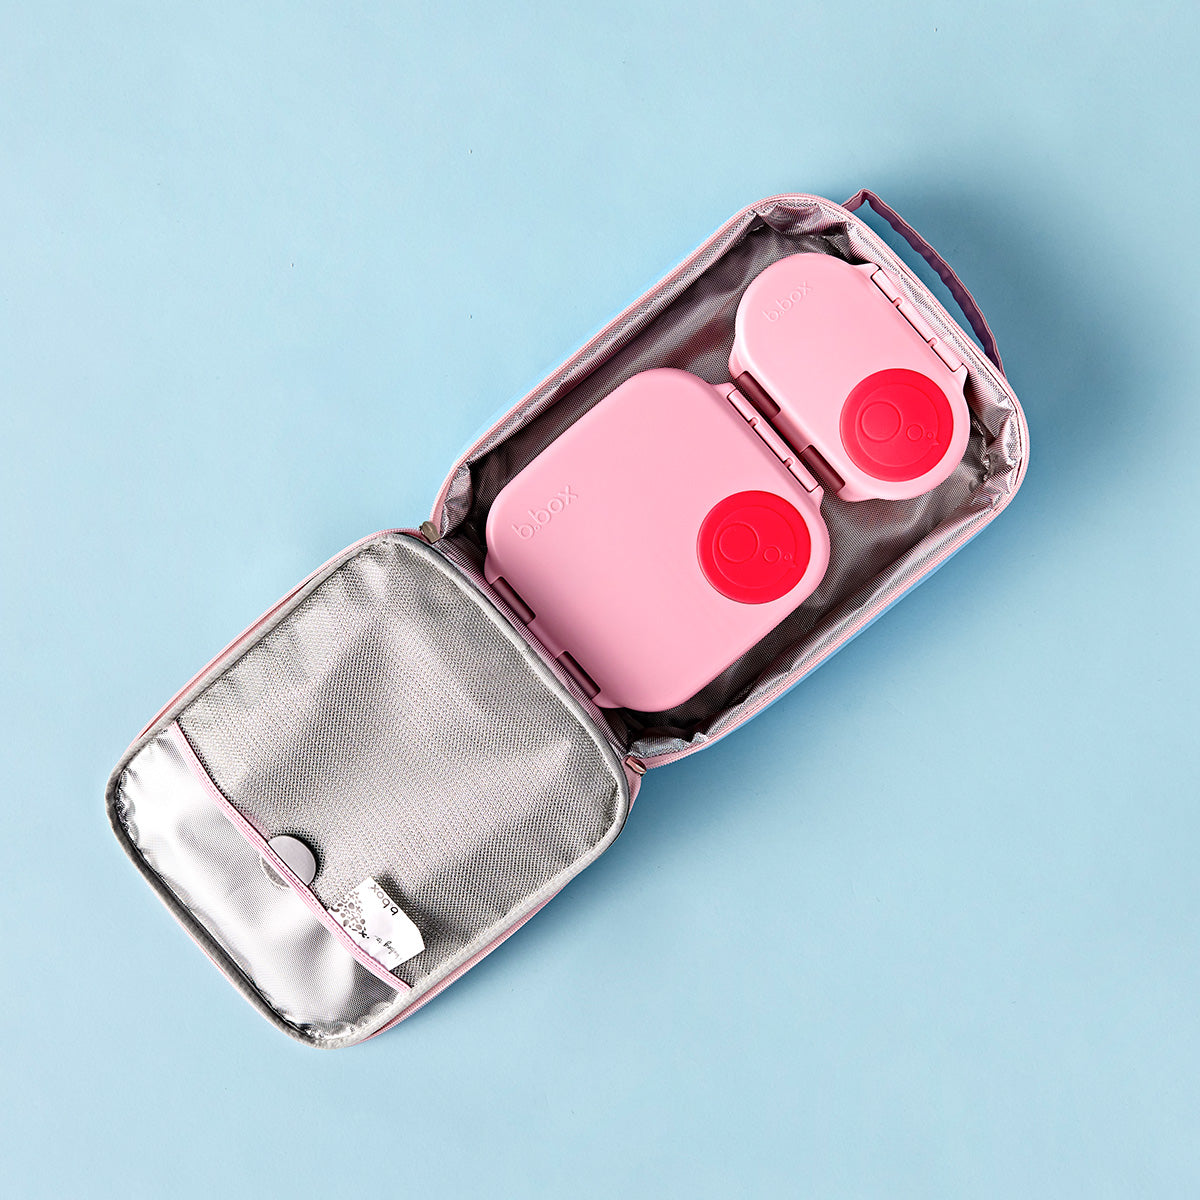 b.box Mini Lunchbox - Bluey – So Cute Baby & Co